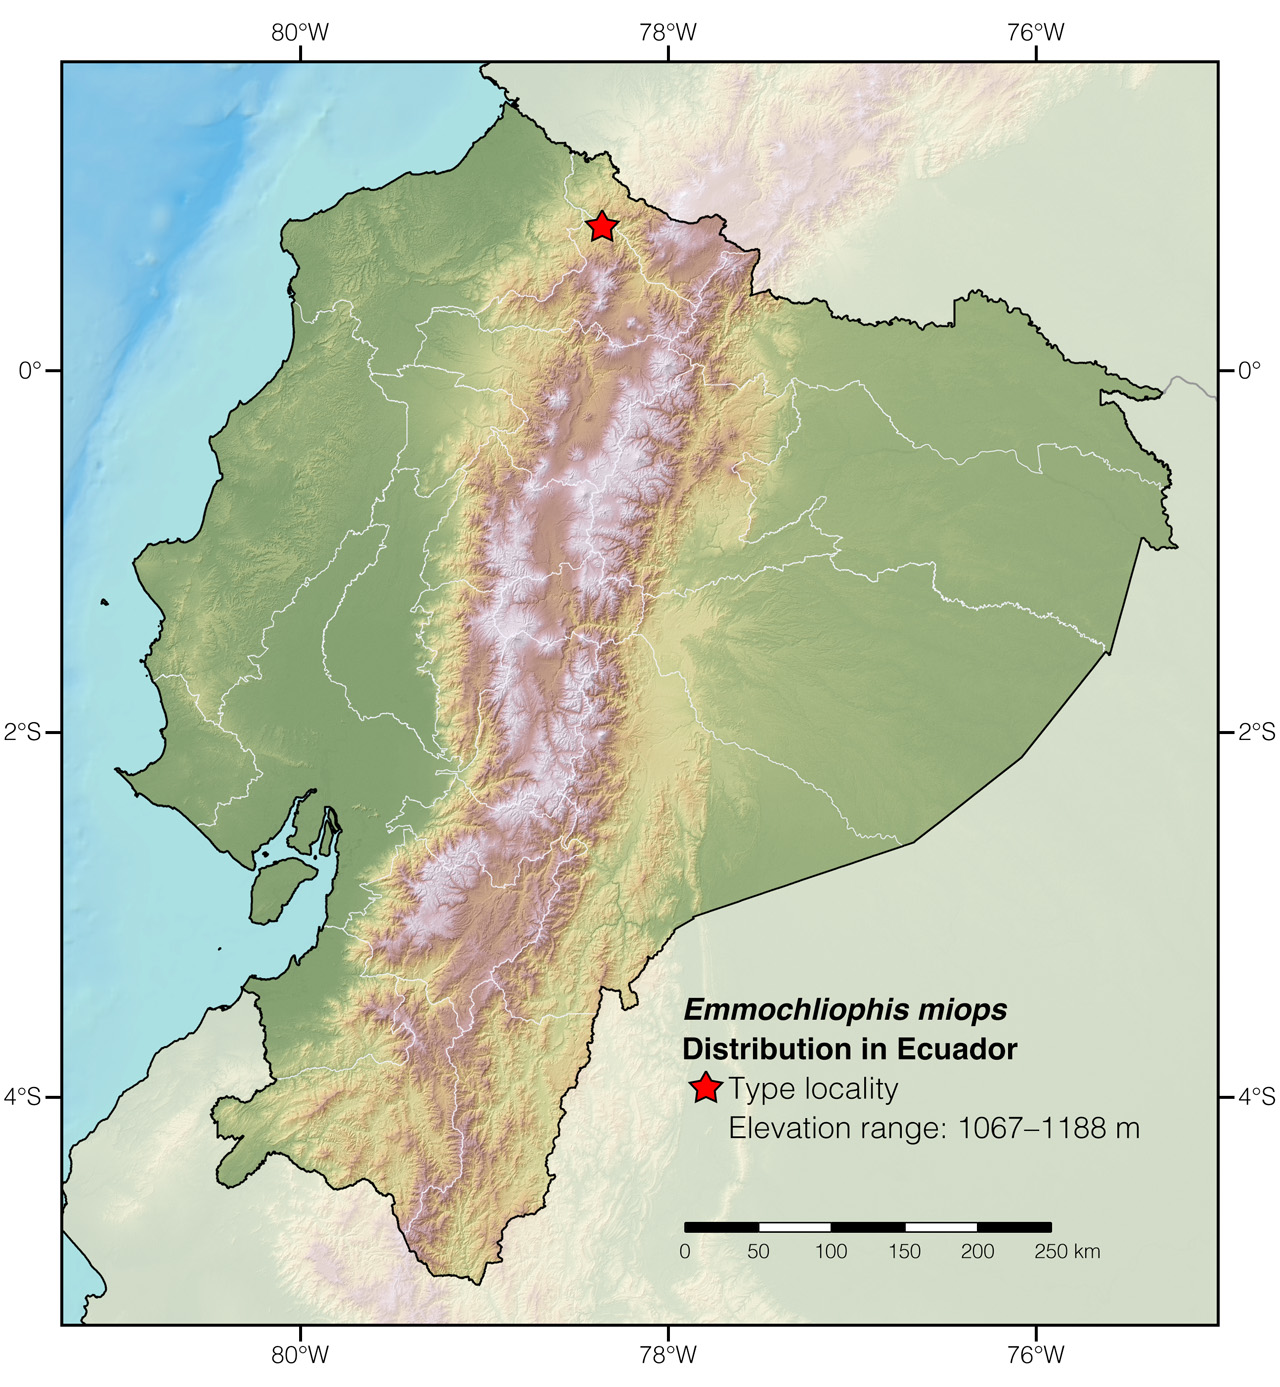 Distribution of Emmochliophis miops in Ecuador